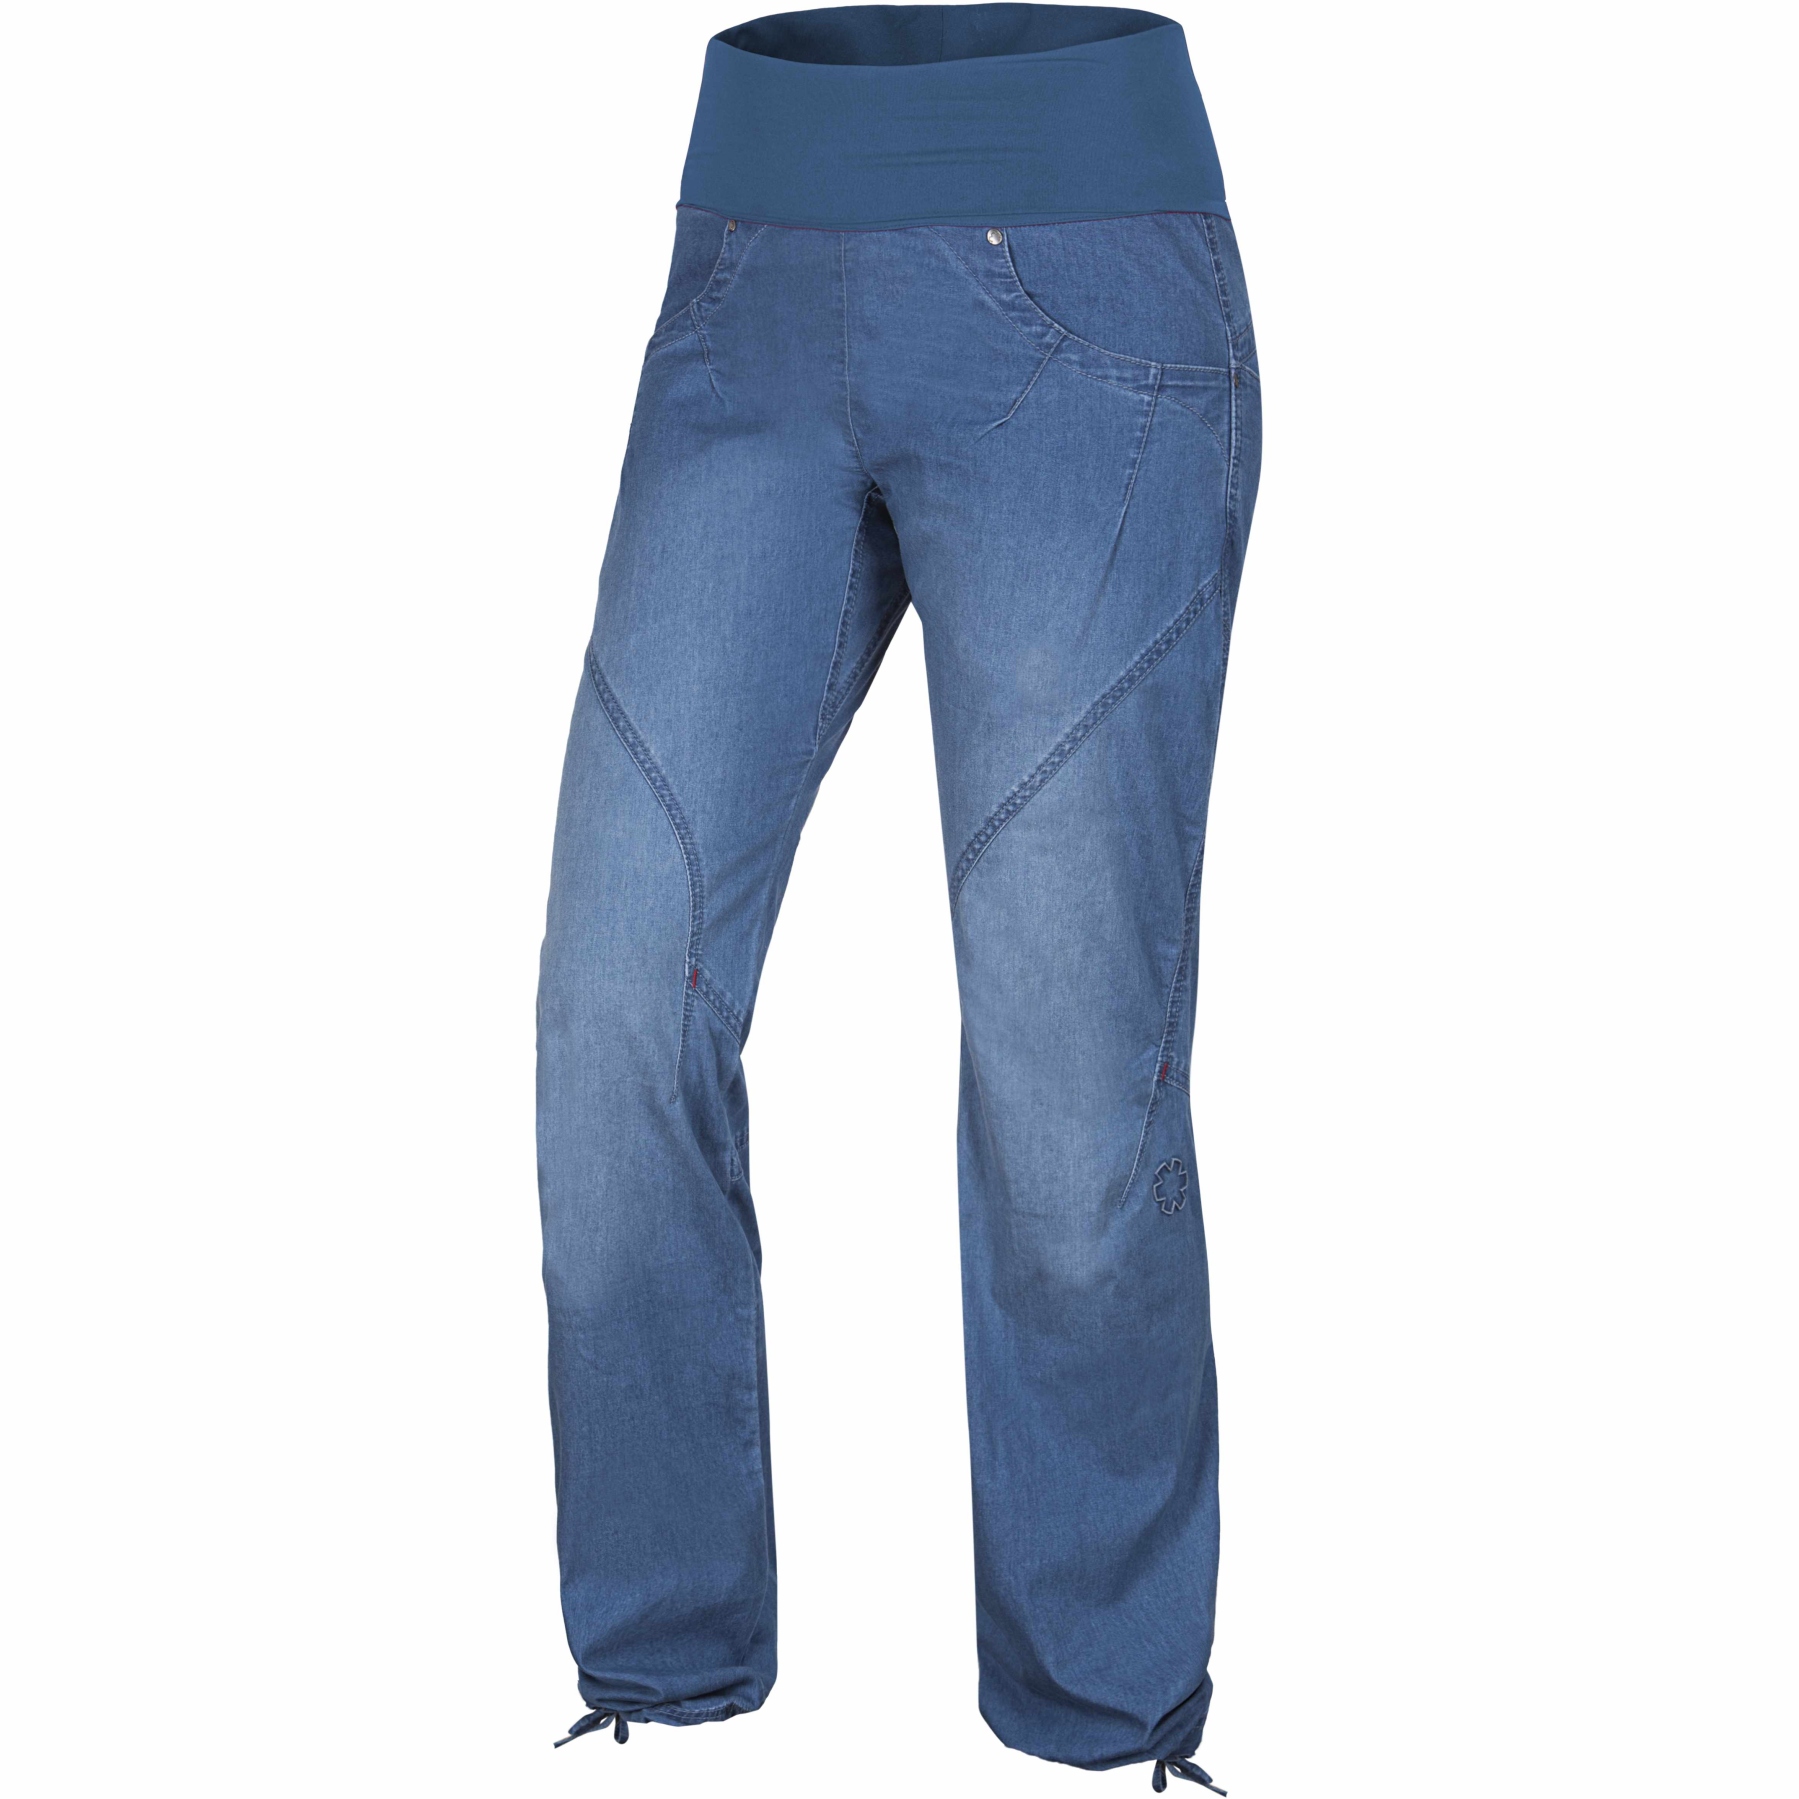 Immagine prodotto da Ocún Pantaloni Arrampicata Donna - Noya Jeans - middle blue denim, washed look